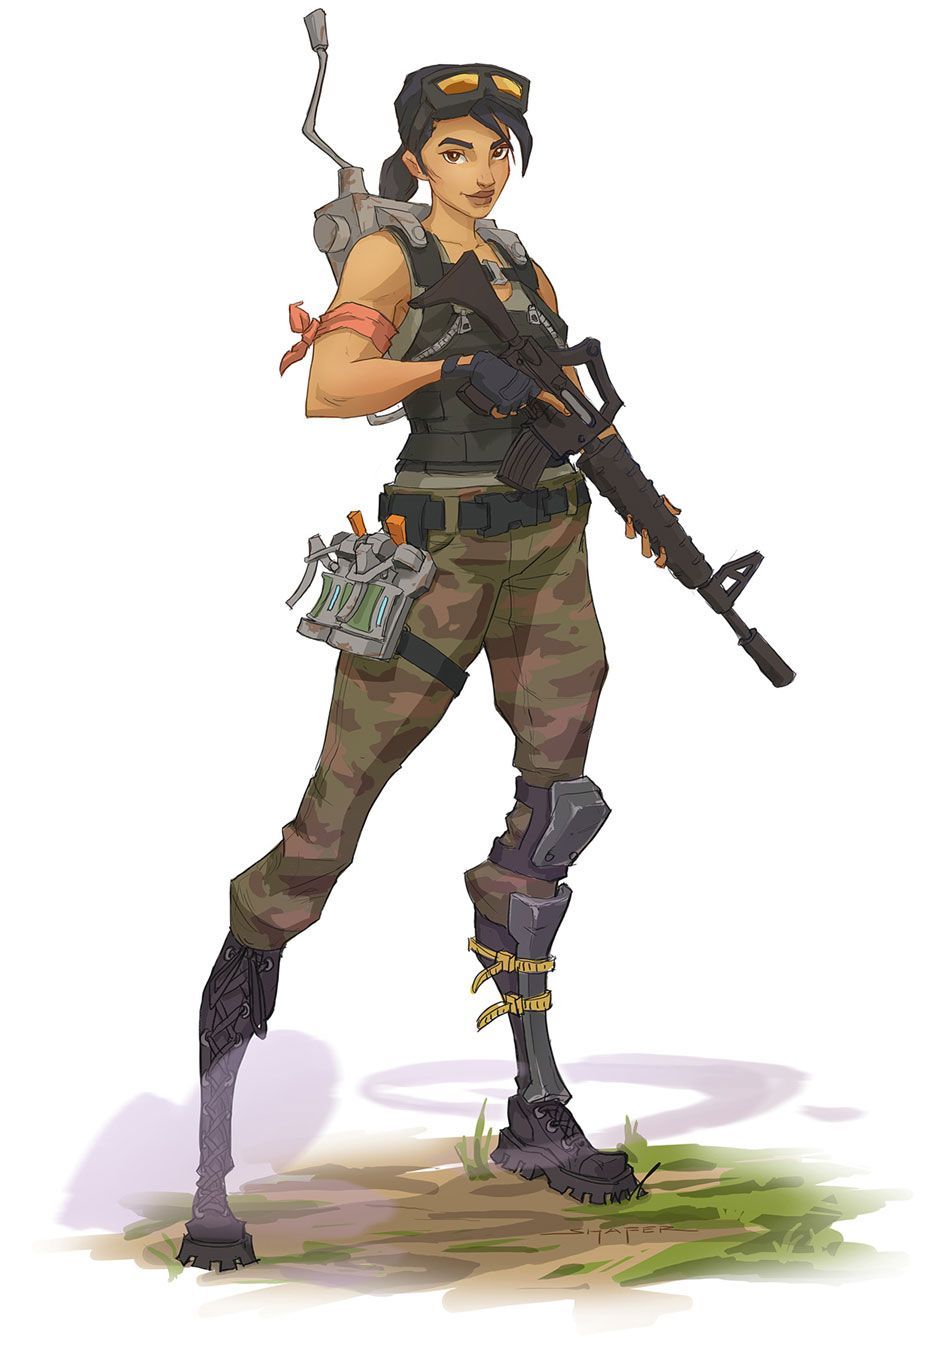 Female Commando Concept from Fortnite. Game